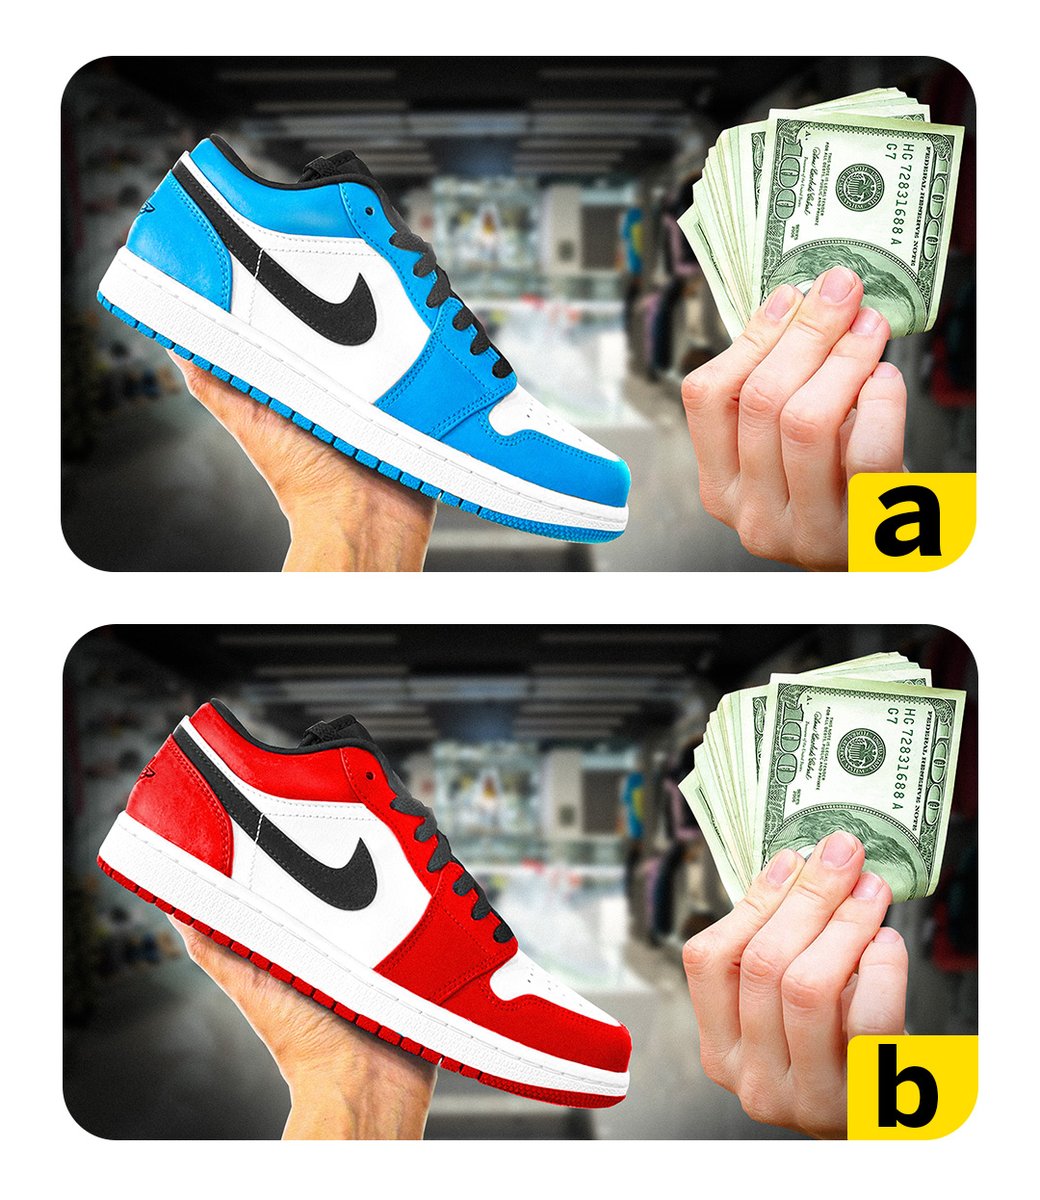 Recent Sneaker Thumbnail⚡️

which thumbnail option do you prefer 🅰️or🅱️?